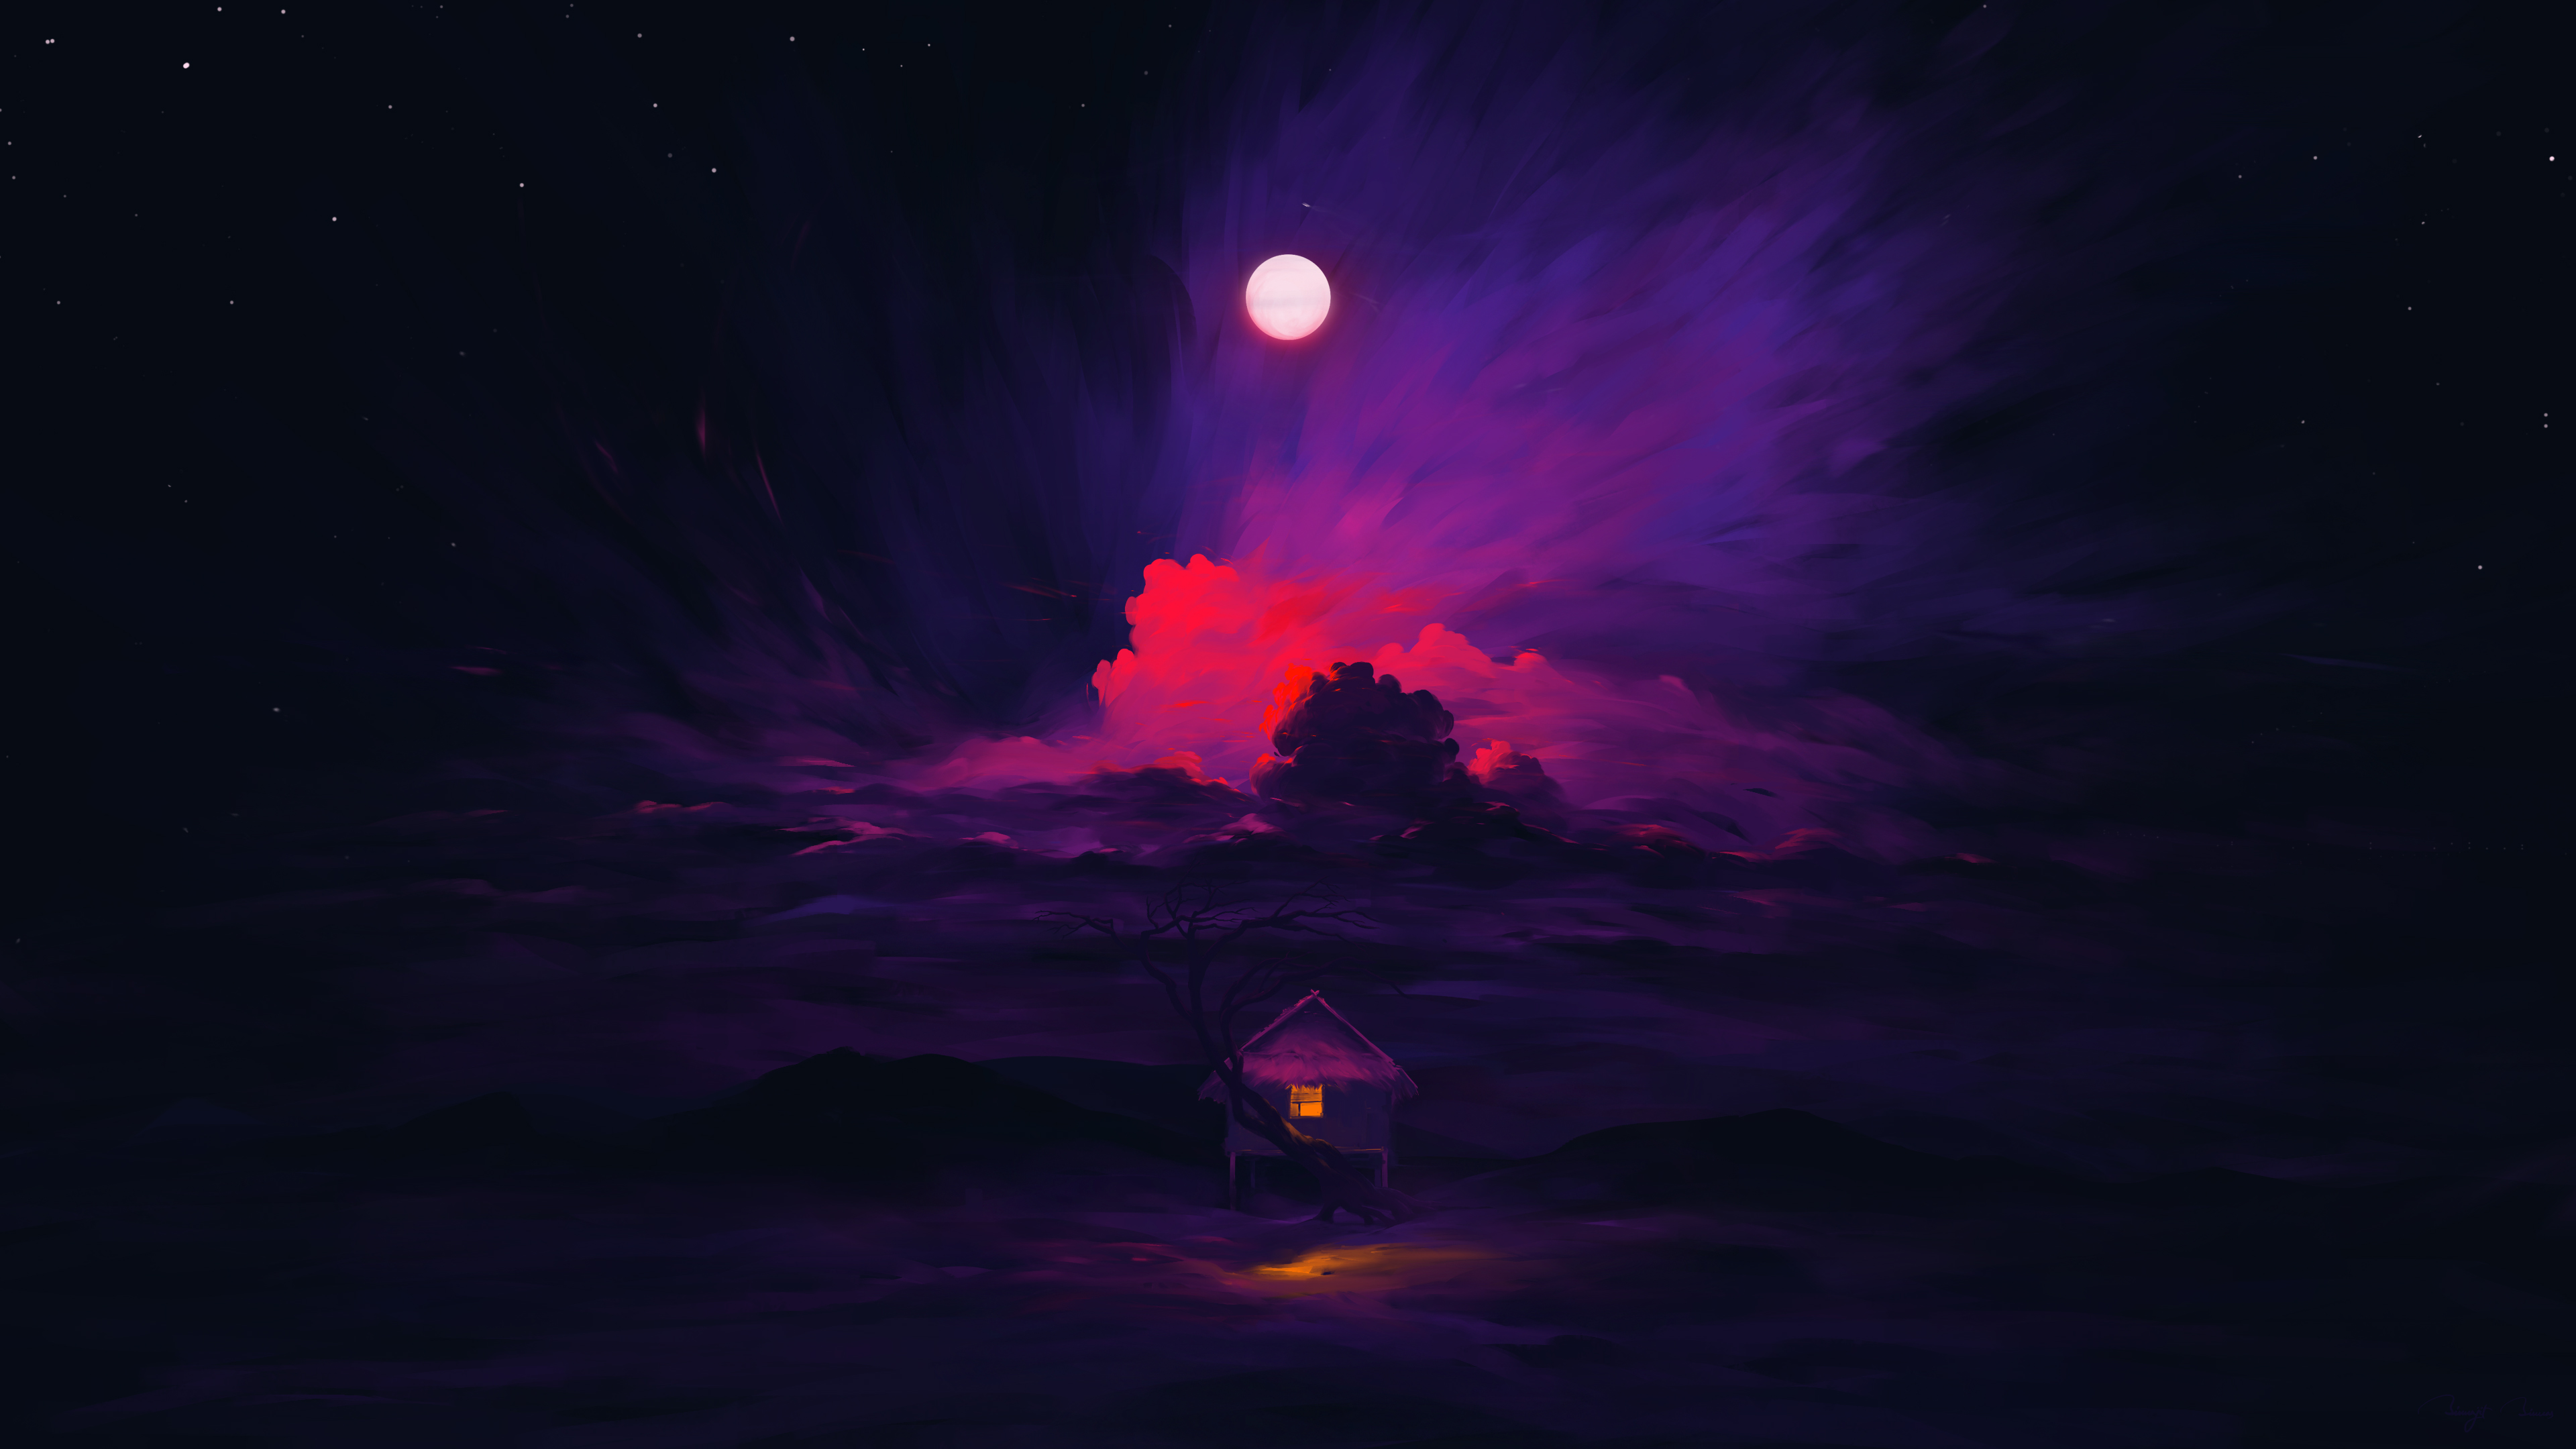 BisBiswas Digital Art Artwork Illustration Landscape Clouds Night Nightscape Moon House Stars 4K Sig 3840x2160